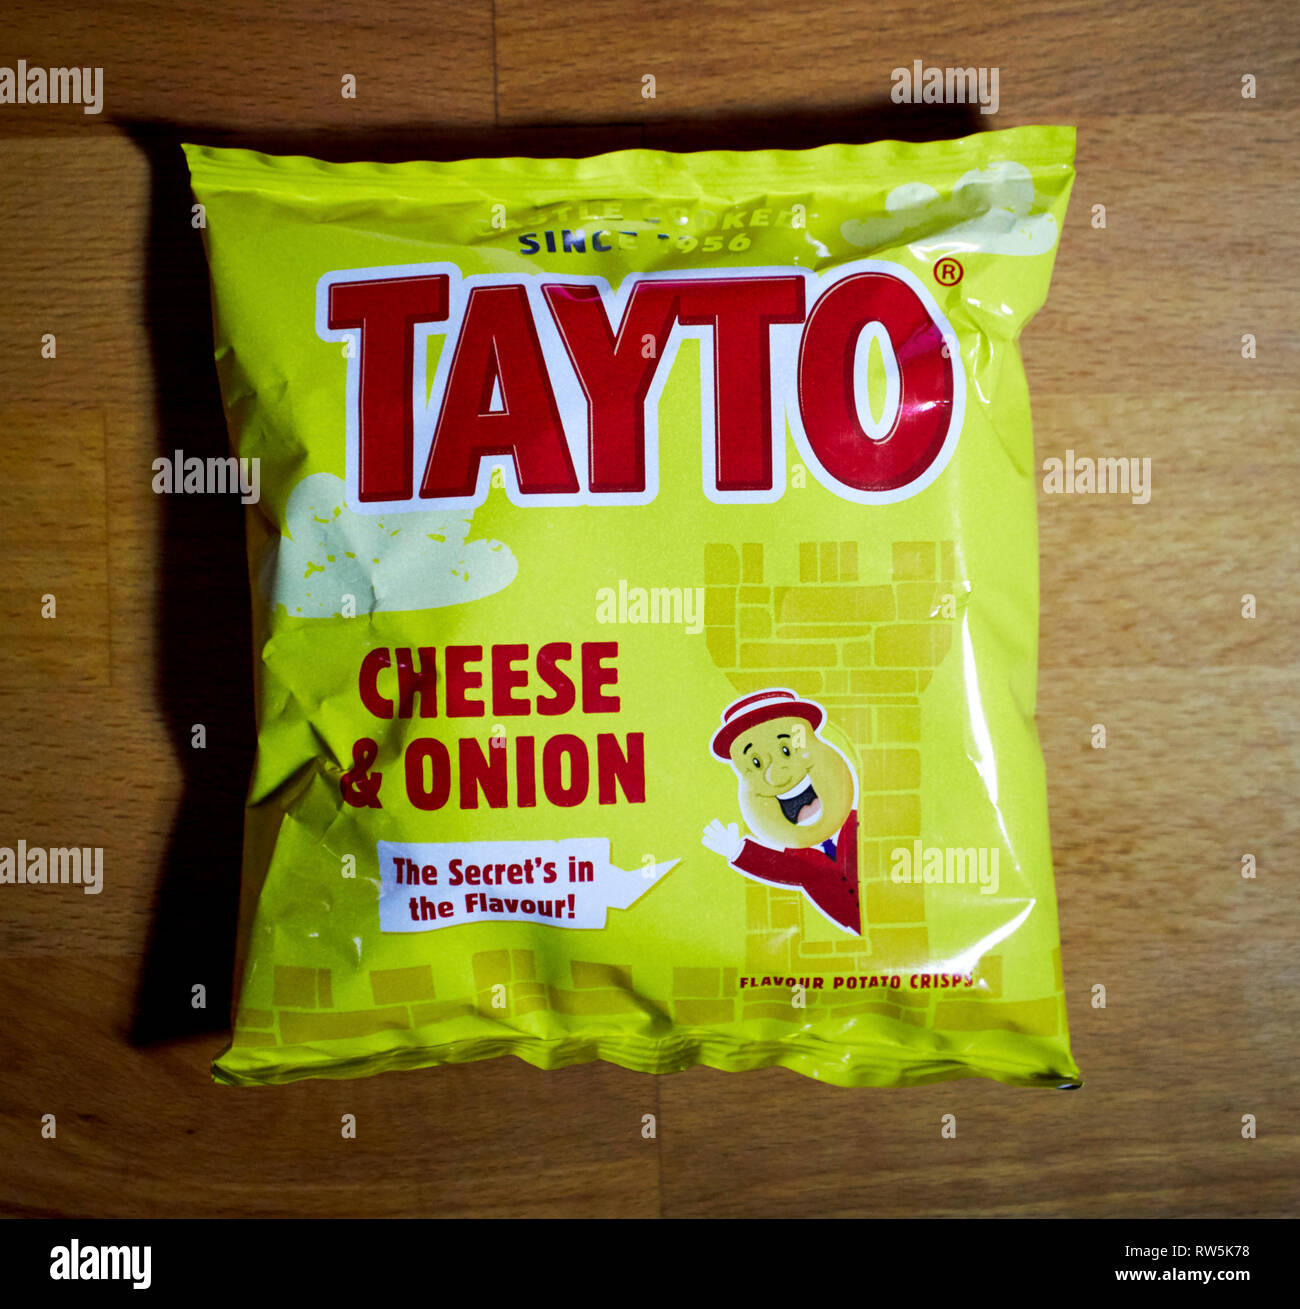 Tayto cheese and onion northern irish potato crisps Stock Photo